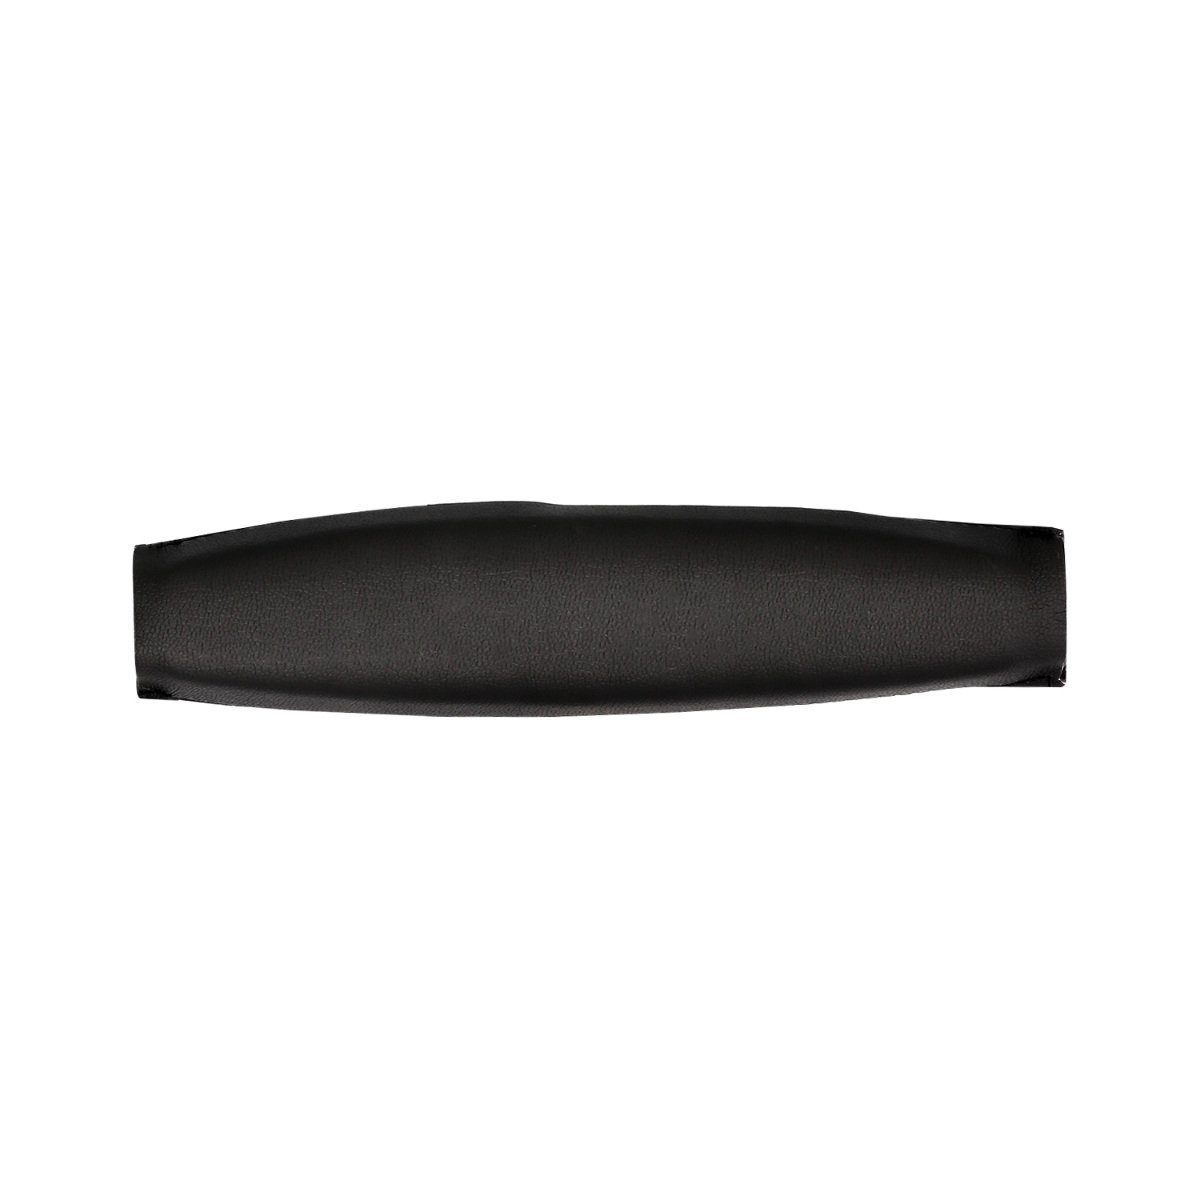 kwmobile Bügelpolster Bügelpolster für Bose Quietcomfort, Kunstleder Kopfbügel Polster für Overear Headphones